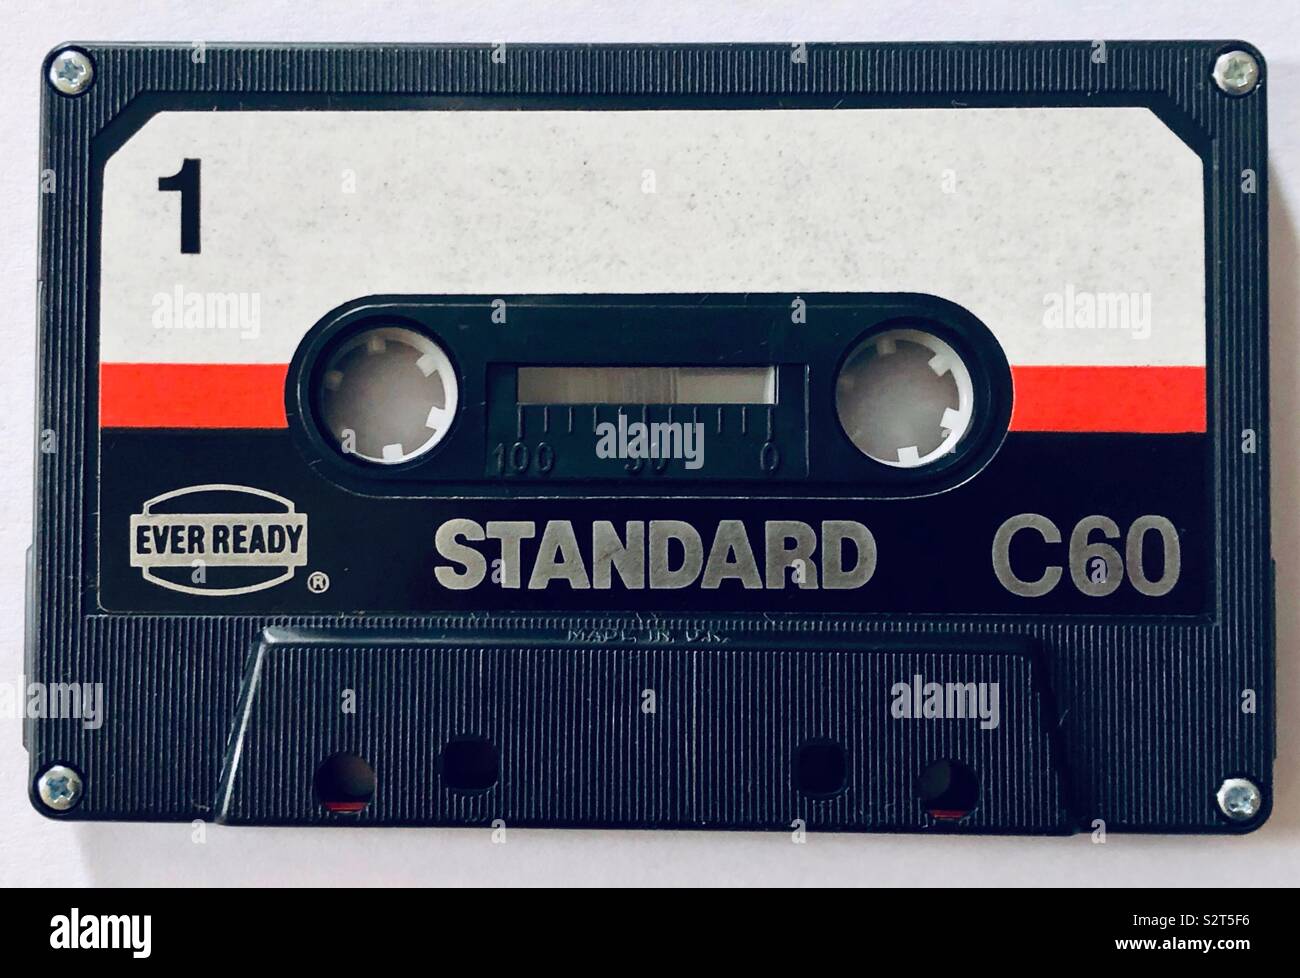 Cinta de cassette de audio compacto Fotografía de stock - Alamy